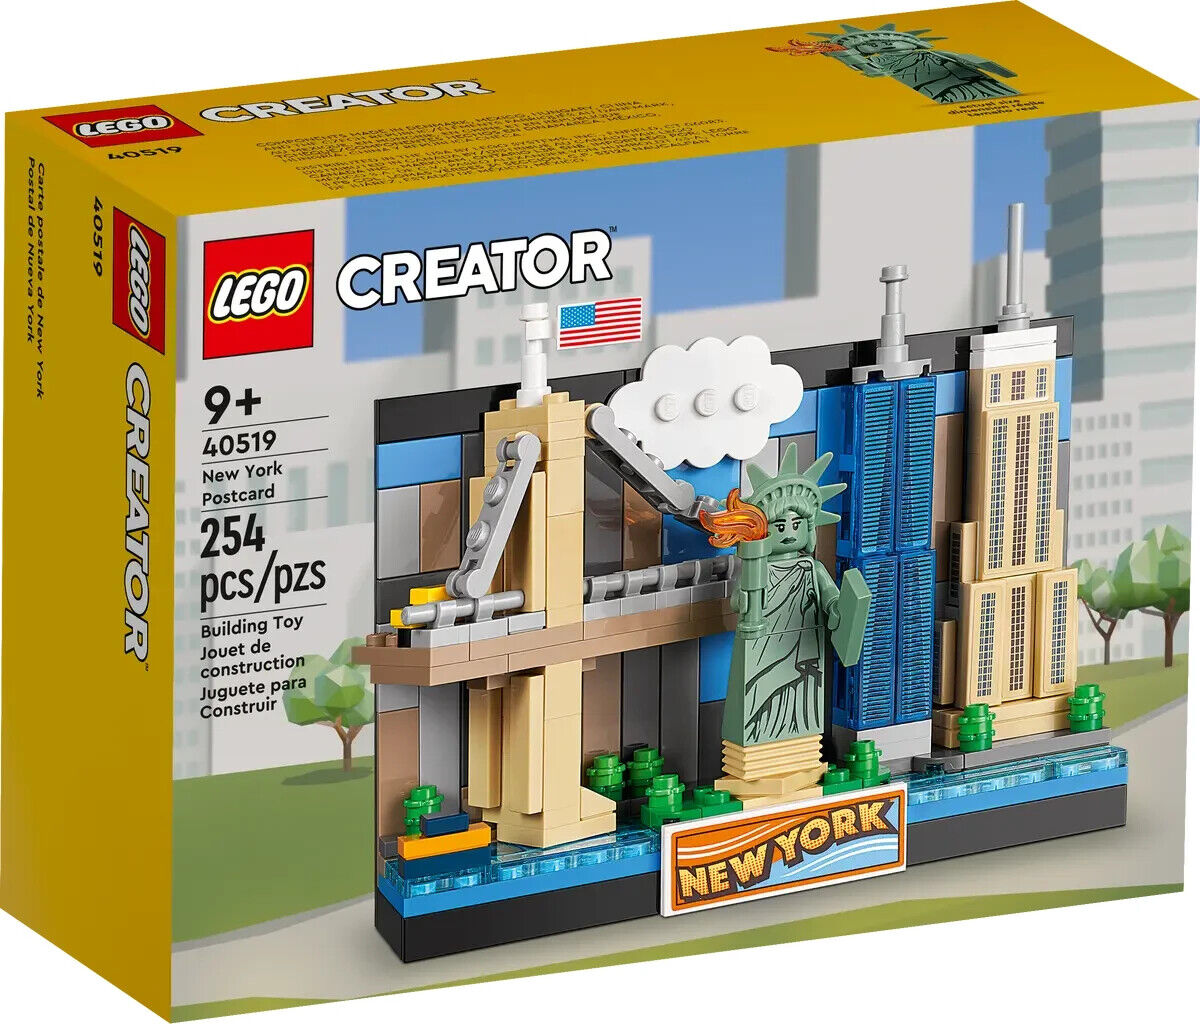 LEGO Creator 40519 New York Postcard Set w/253 Pieces